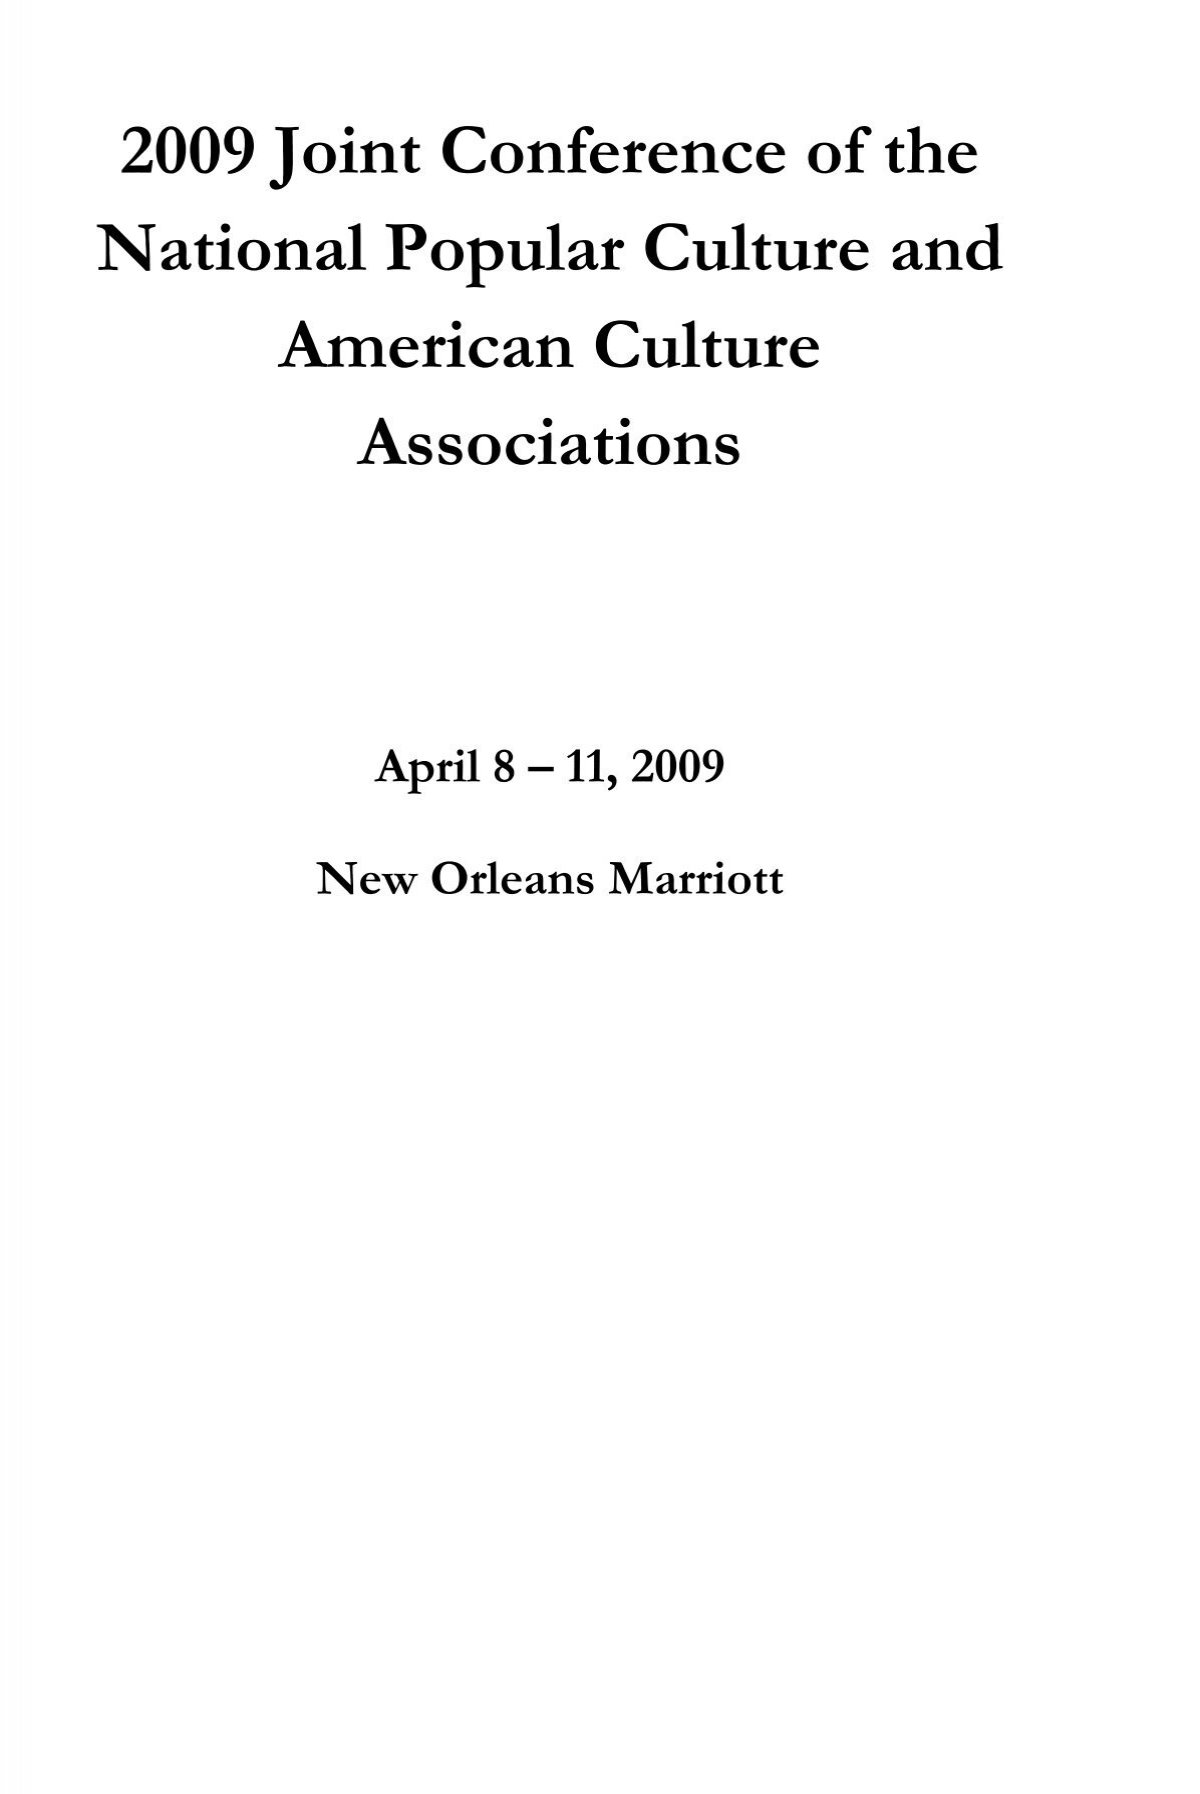 2009 National Conference Program - PCA/ACA